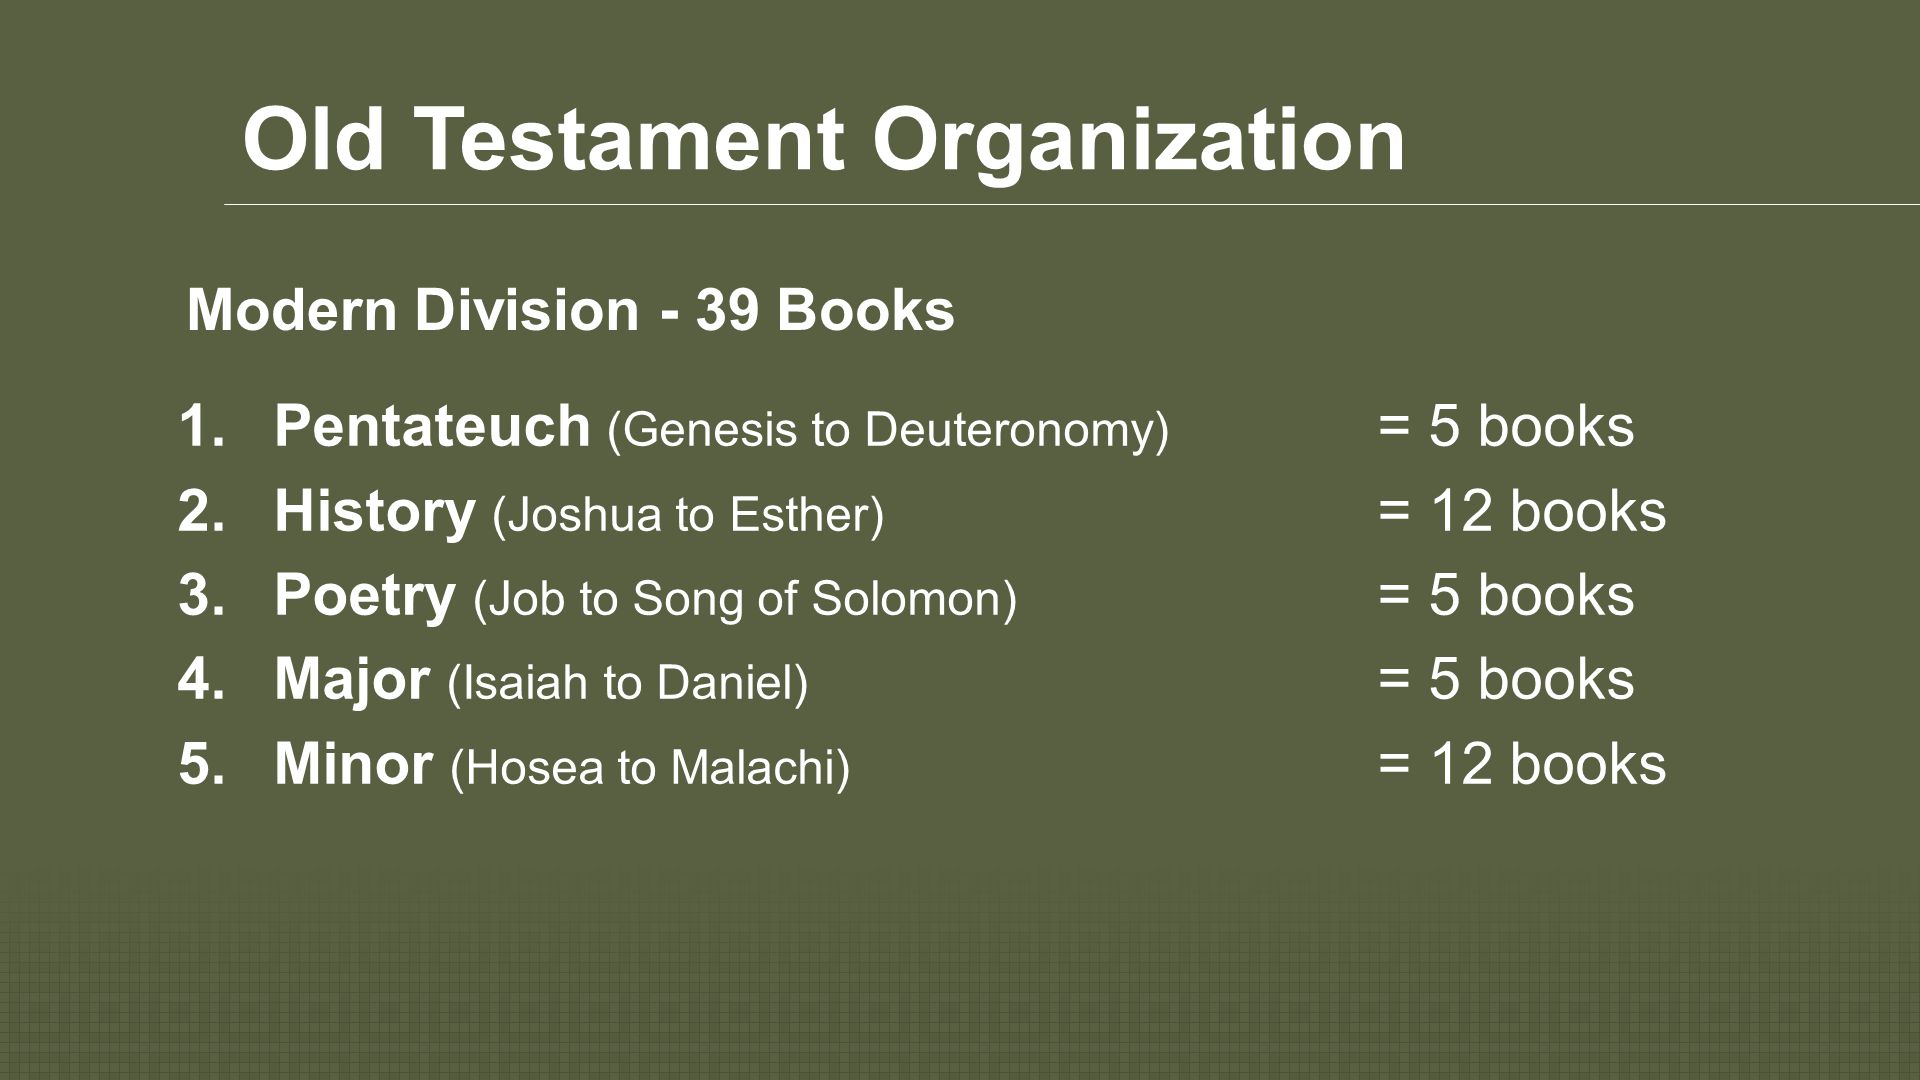 Old Testament Organization Modern Division - 39 Books 1.Pentateuch (Genesis to Deuteronomy) = 5 books  History (Joshua to Esther) = 12 books 3.Poetry (Job to Song of Solomon) = 5 books 4.Major (Isaiah to Daniel) = 5 books 5.Minor (Hosea to Malachi) = 12 books